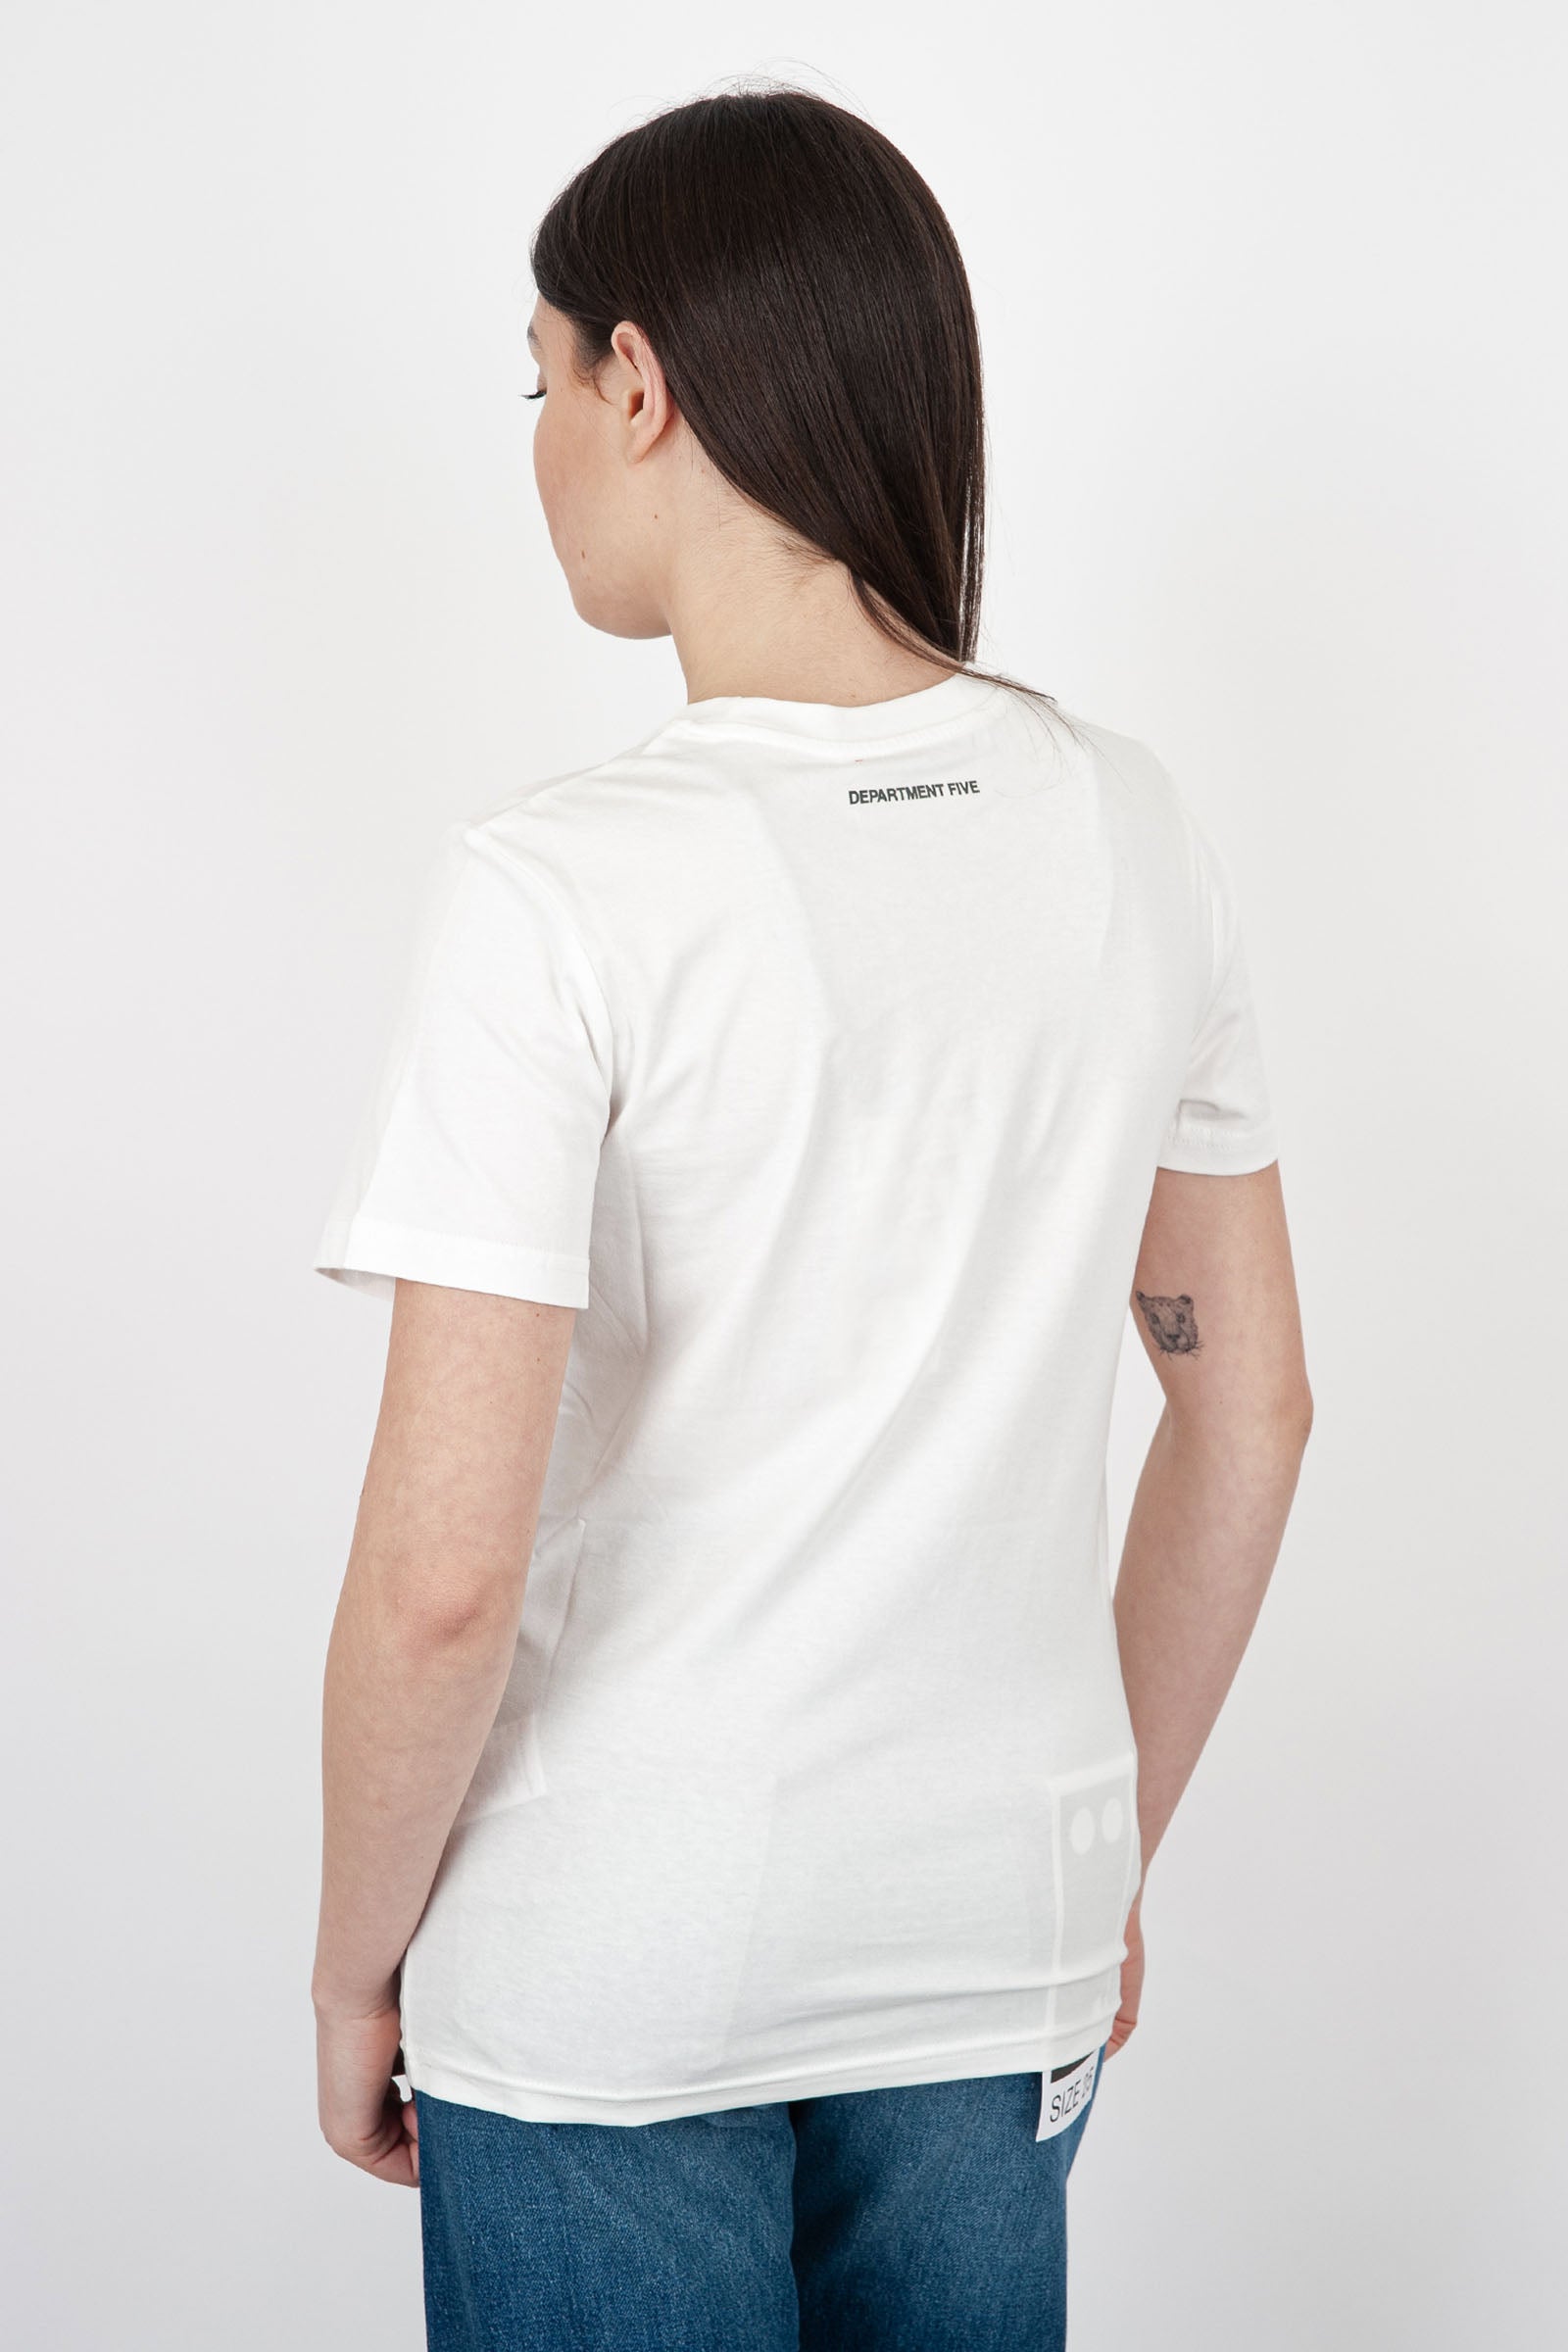 Department Five T-shirt Girocollo Fleur Cotone Bianco - 4